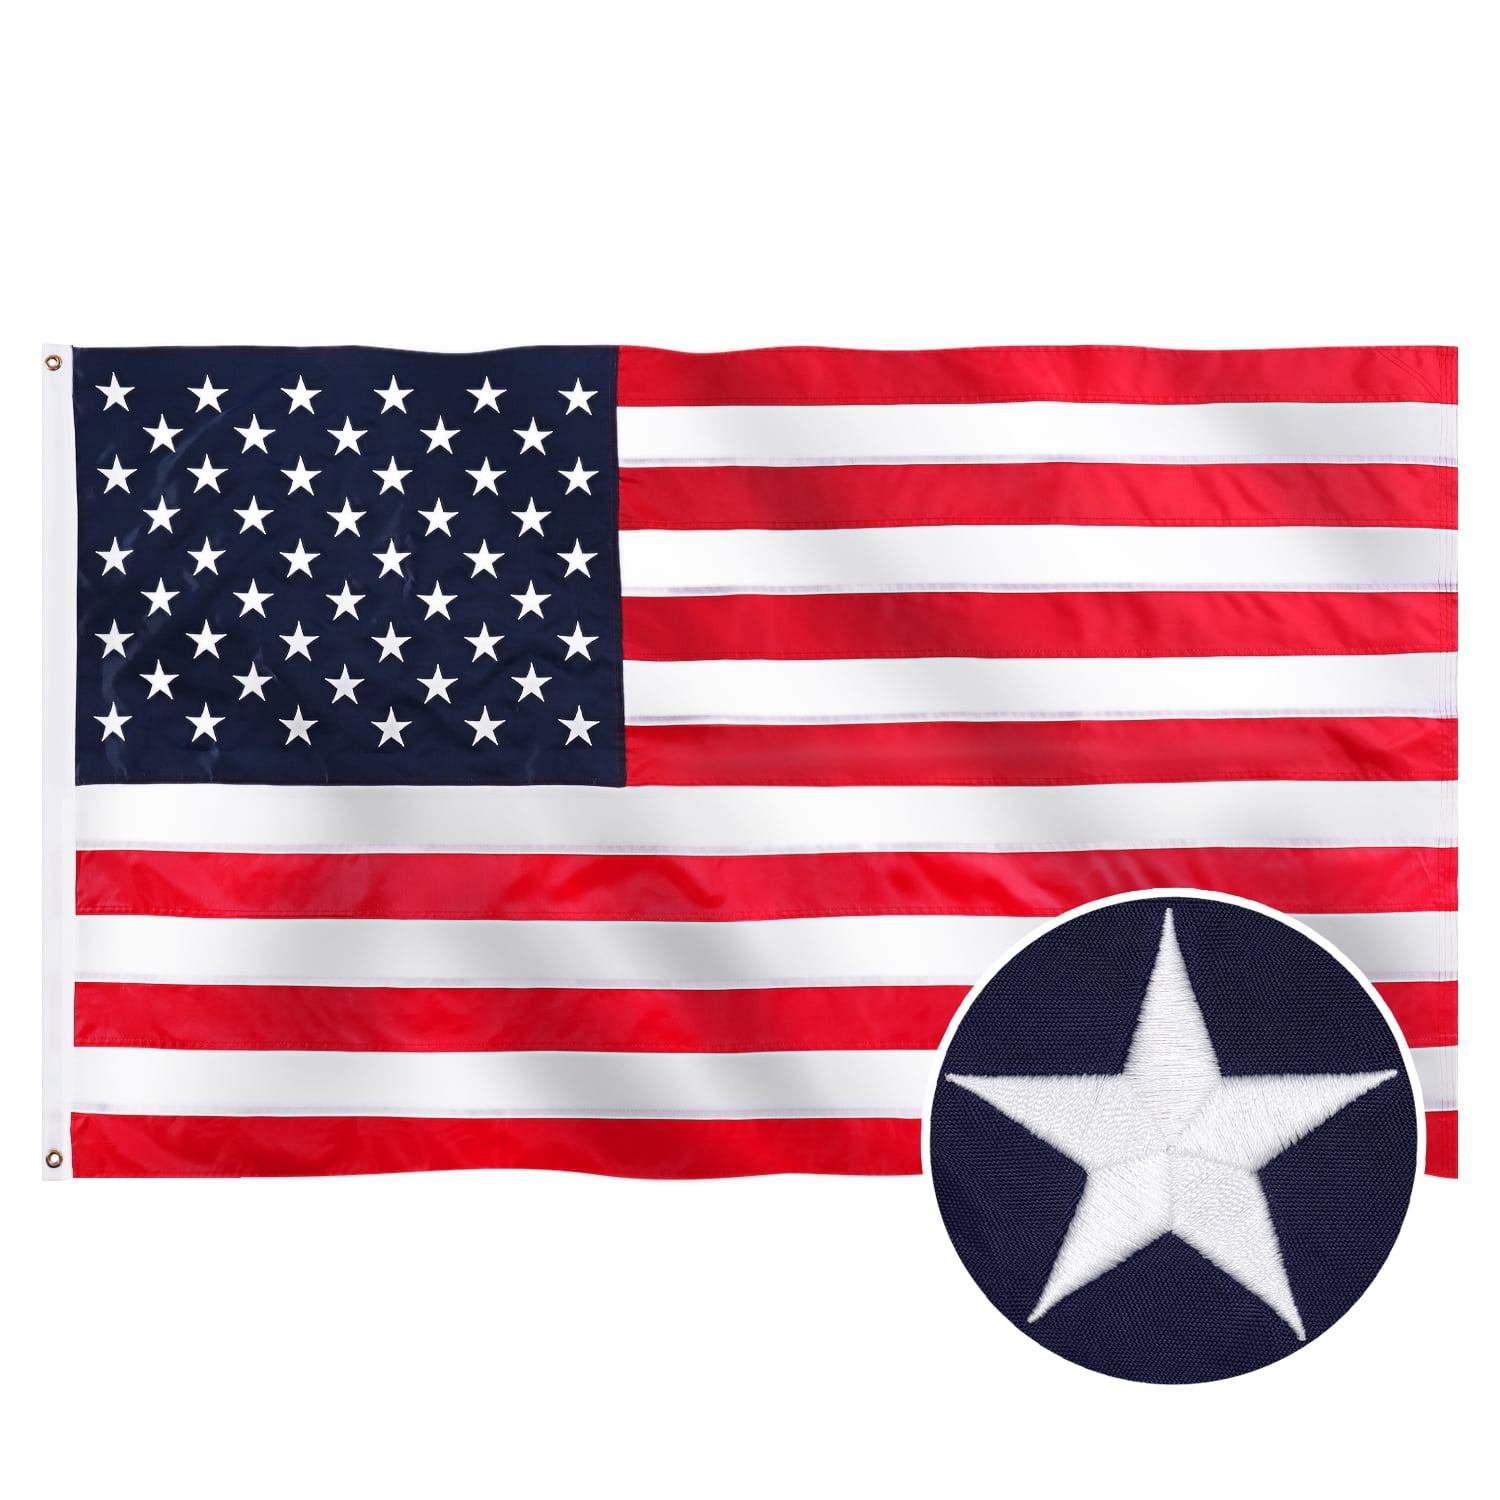 NYLON AMERICAN FLAG 3X5 EMBROIDERED STARS SEWN STRIPES US USA HIGH QUALITY NEW 